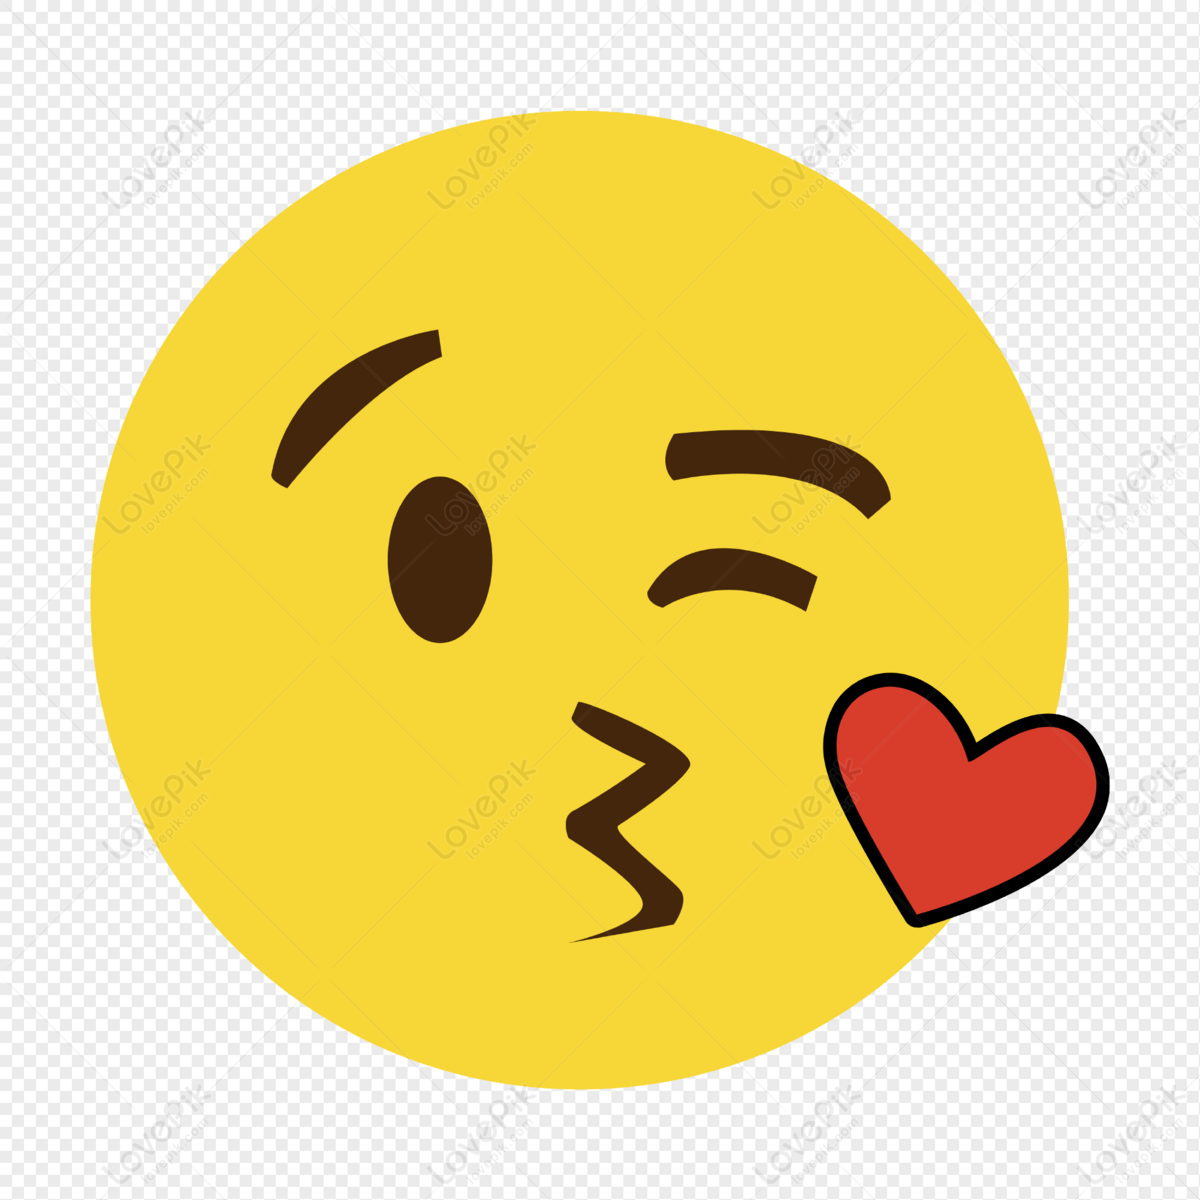 Blowing Kiss Emoji Blow Kiss Kiss Emoji Loving Emoji Free Png And Clipart Image For Free